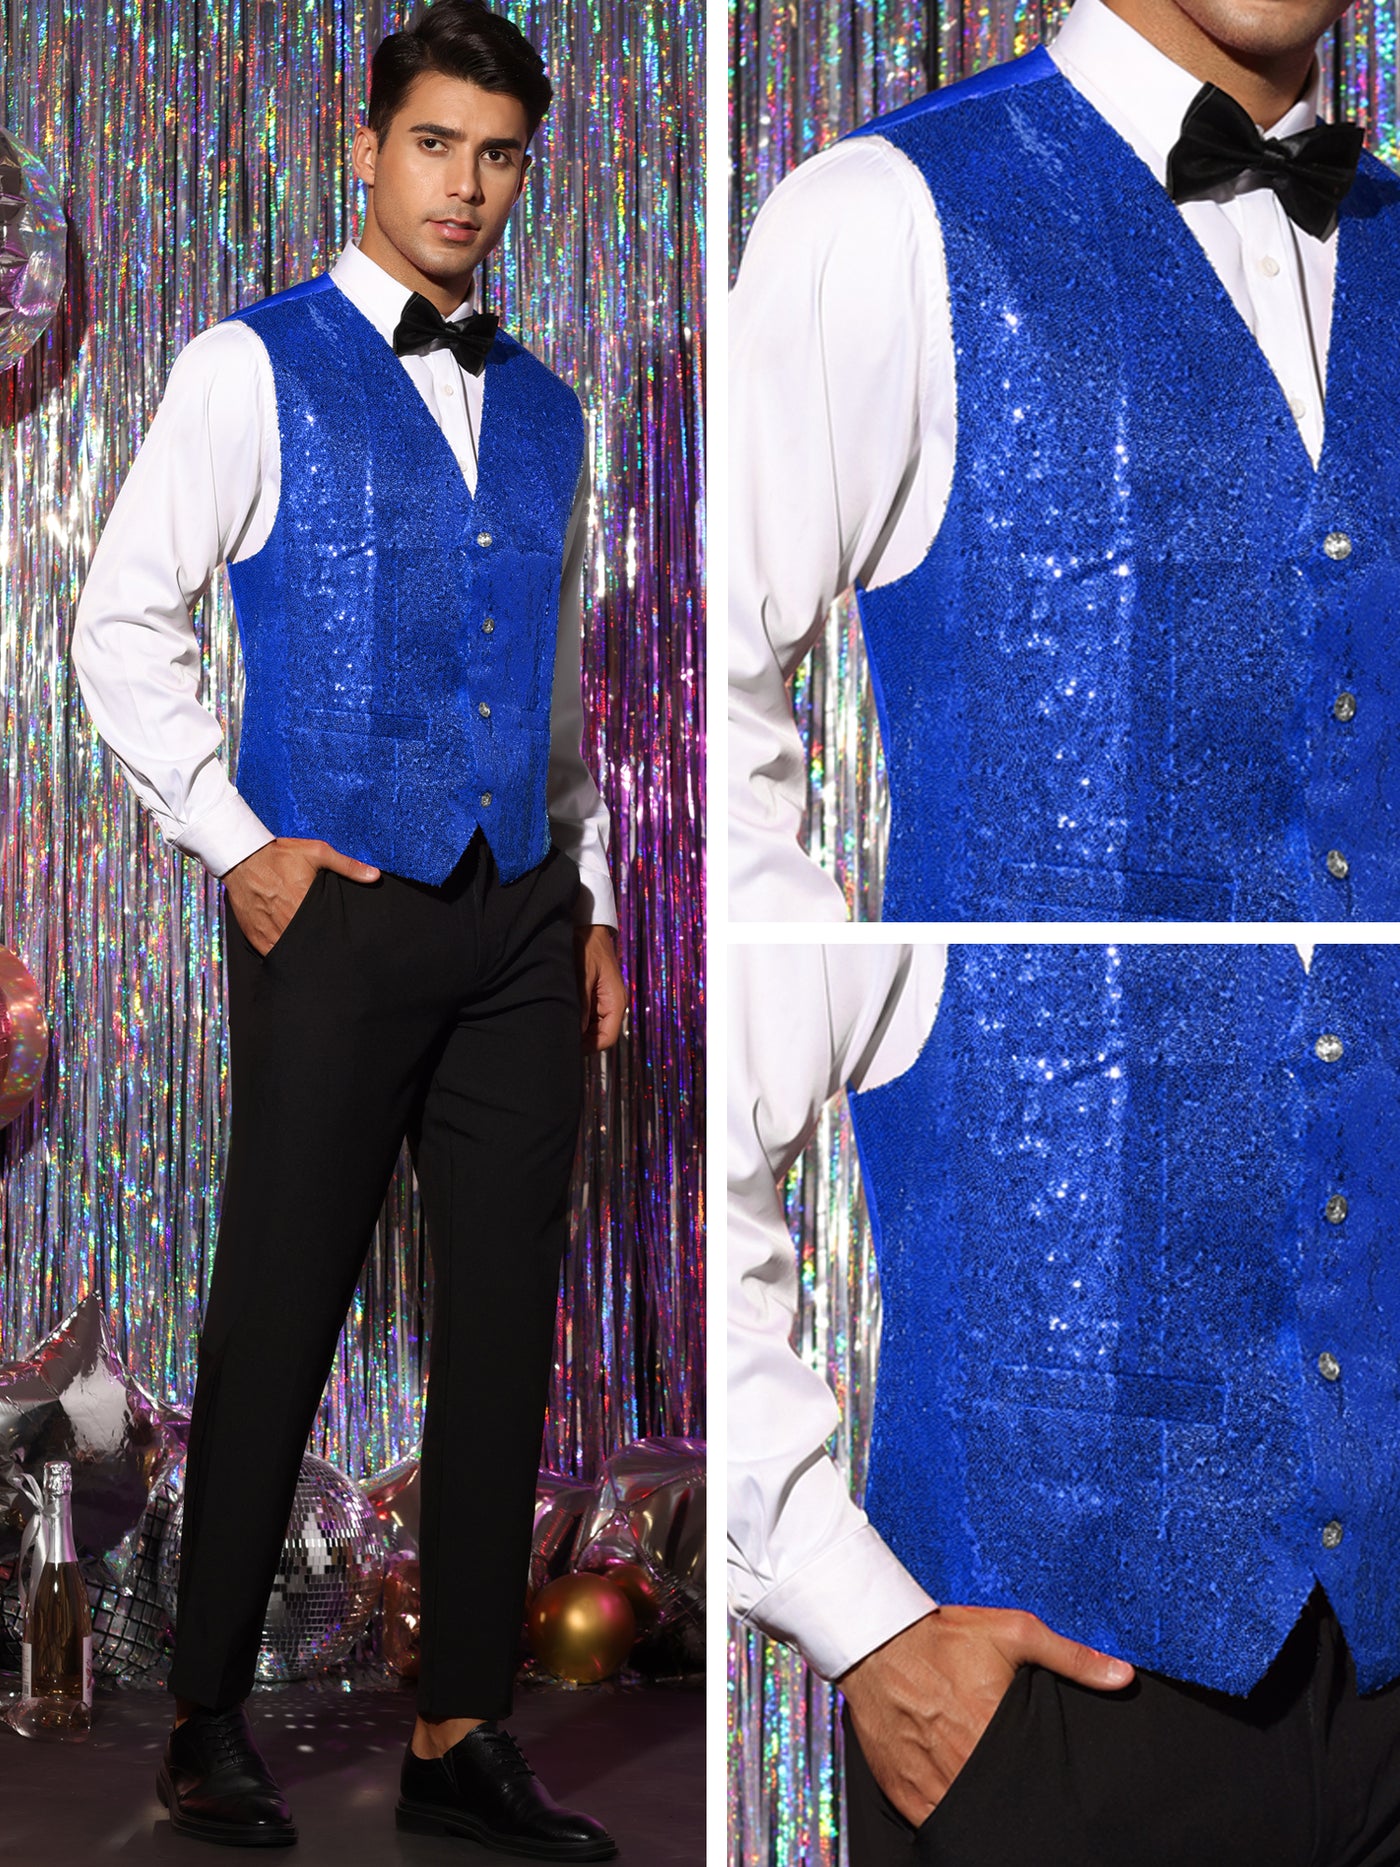 Bublédon Sequin Suit Vest for Men's V-Neck Sleeveless Disco Sparkly Waistcoat